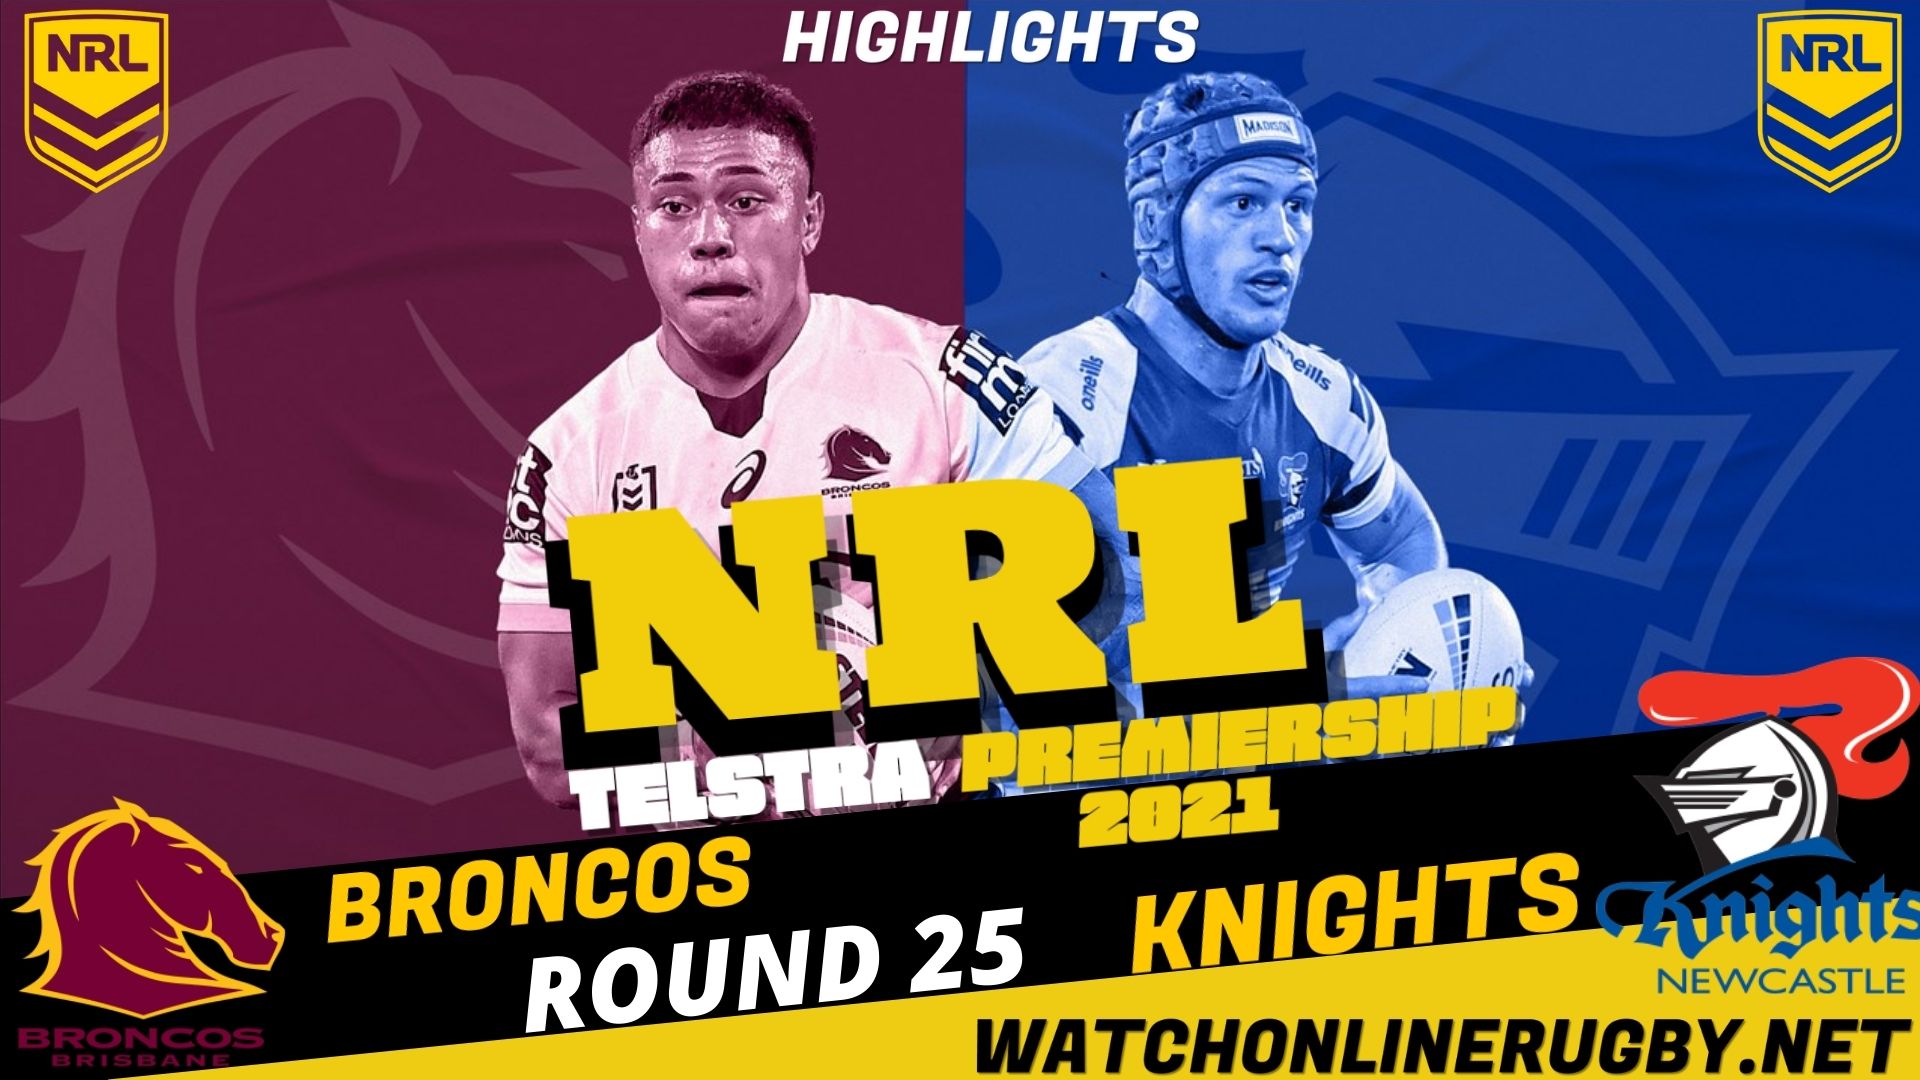 Broncos Vs Knights Highlights RD 25 NRL Rugby